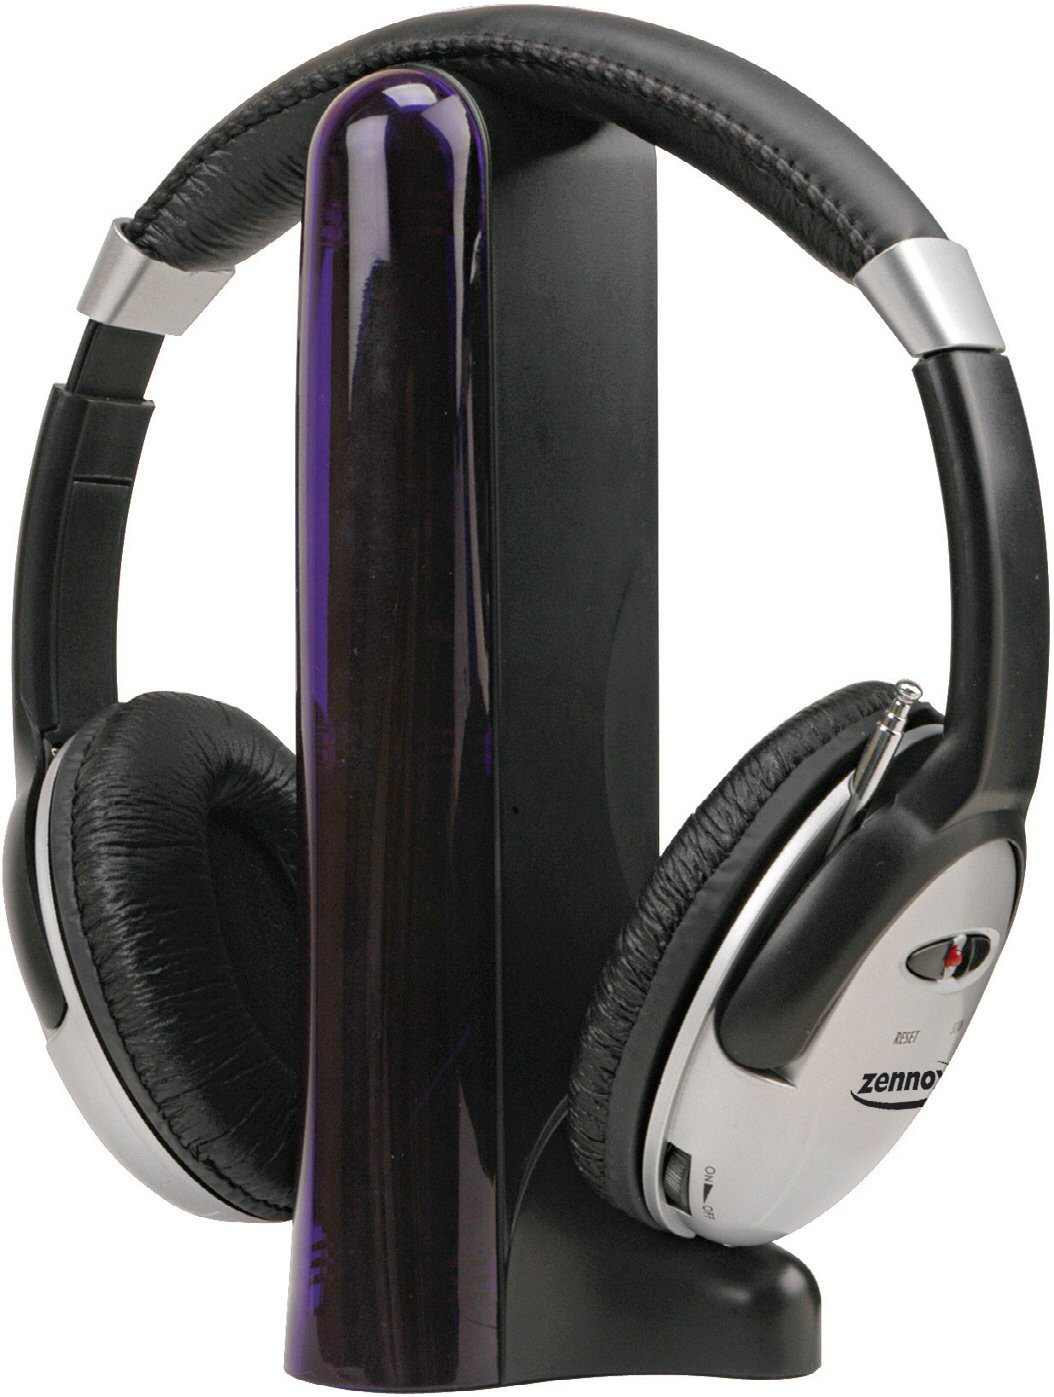 Unbranded Zennox Wireless Stereo Headphones